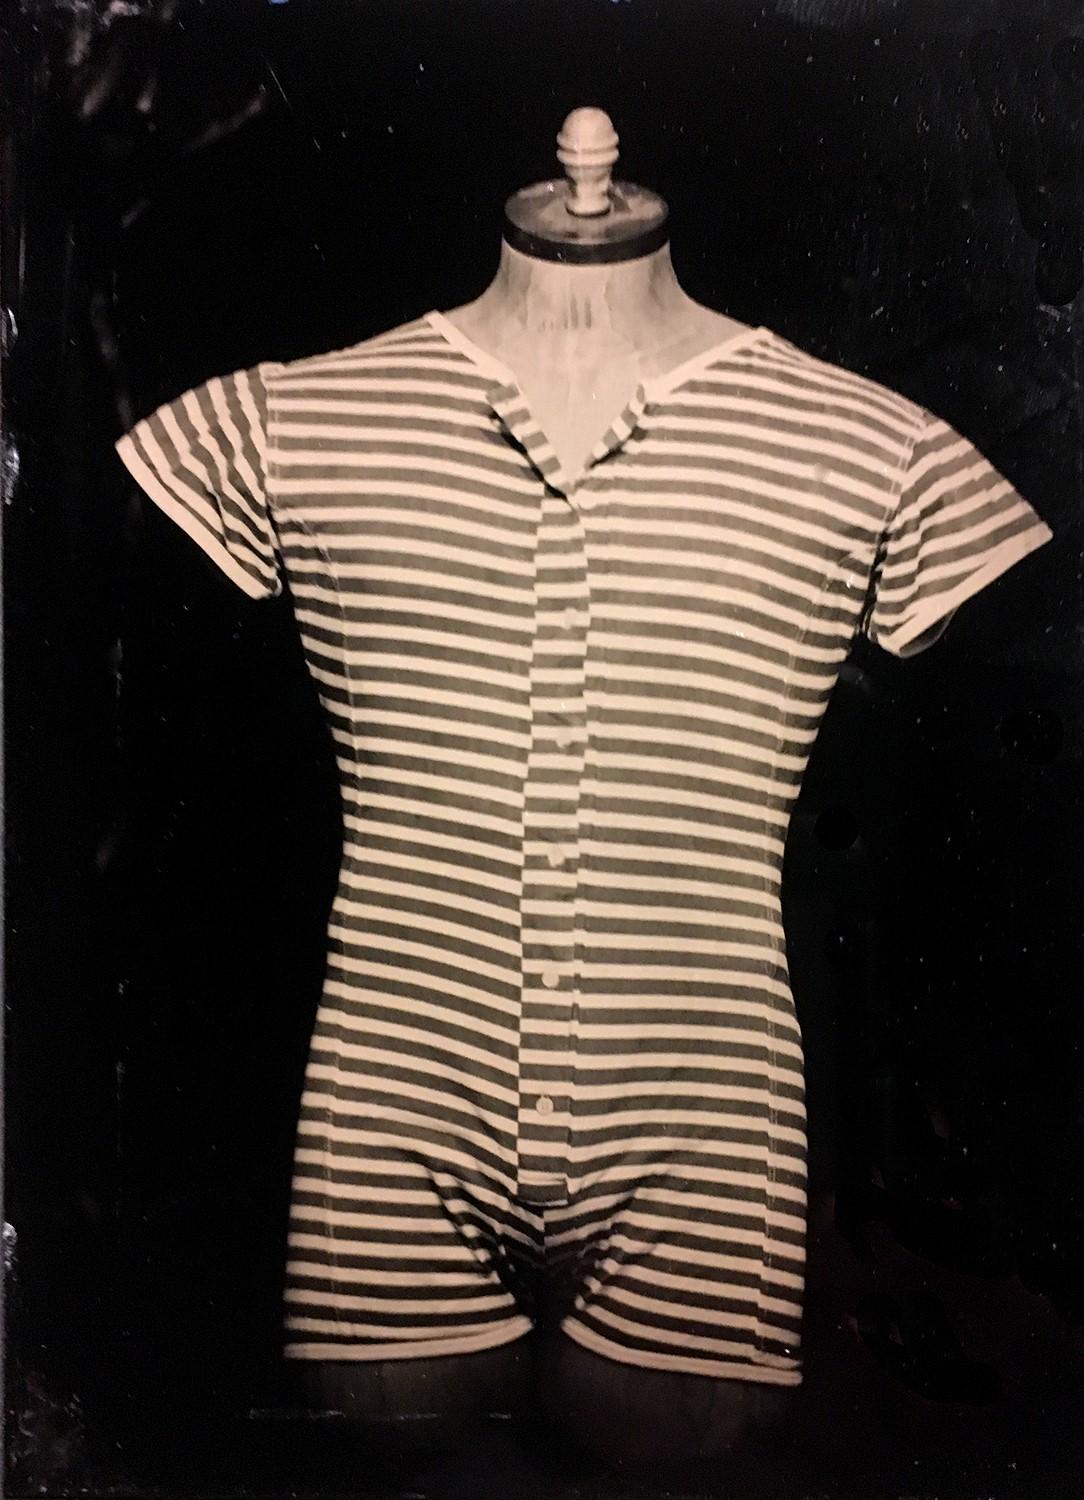 David Sokosh Figurative Photograph - Stripes (Tin Type Photograph of Vintage Men's Swimwear, Vintage Frame)